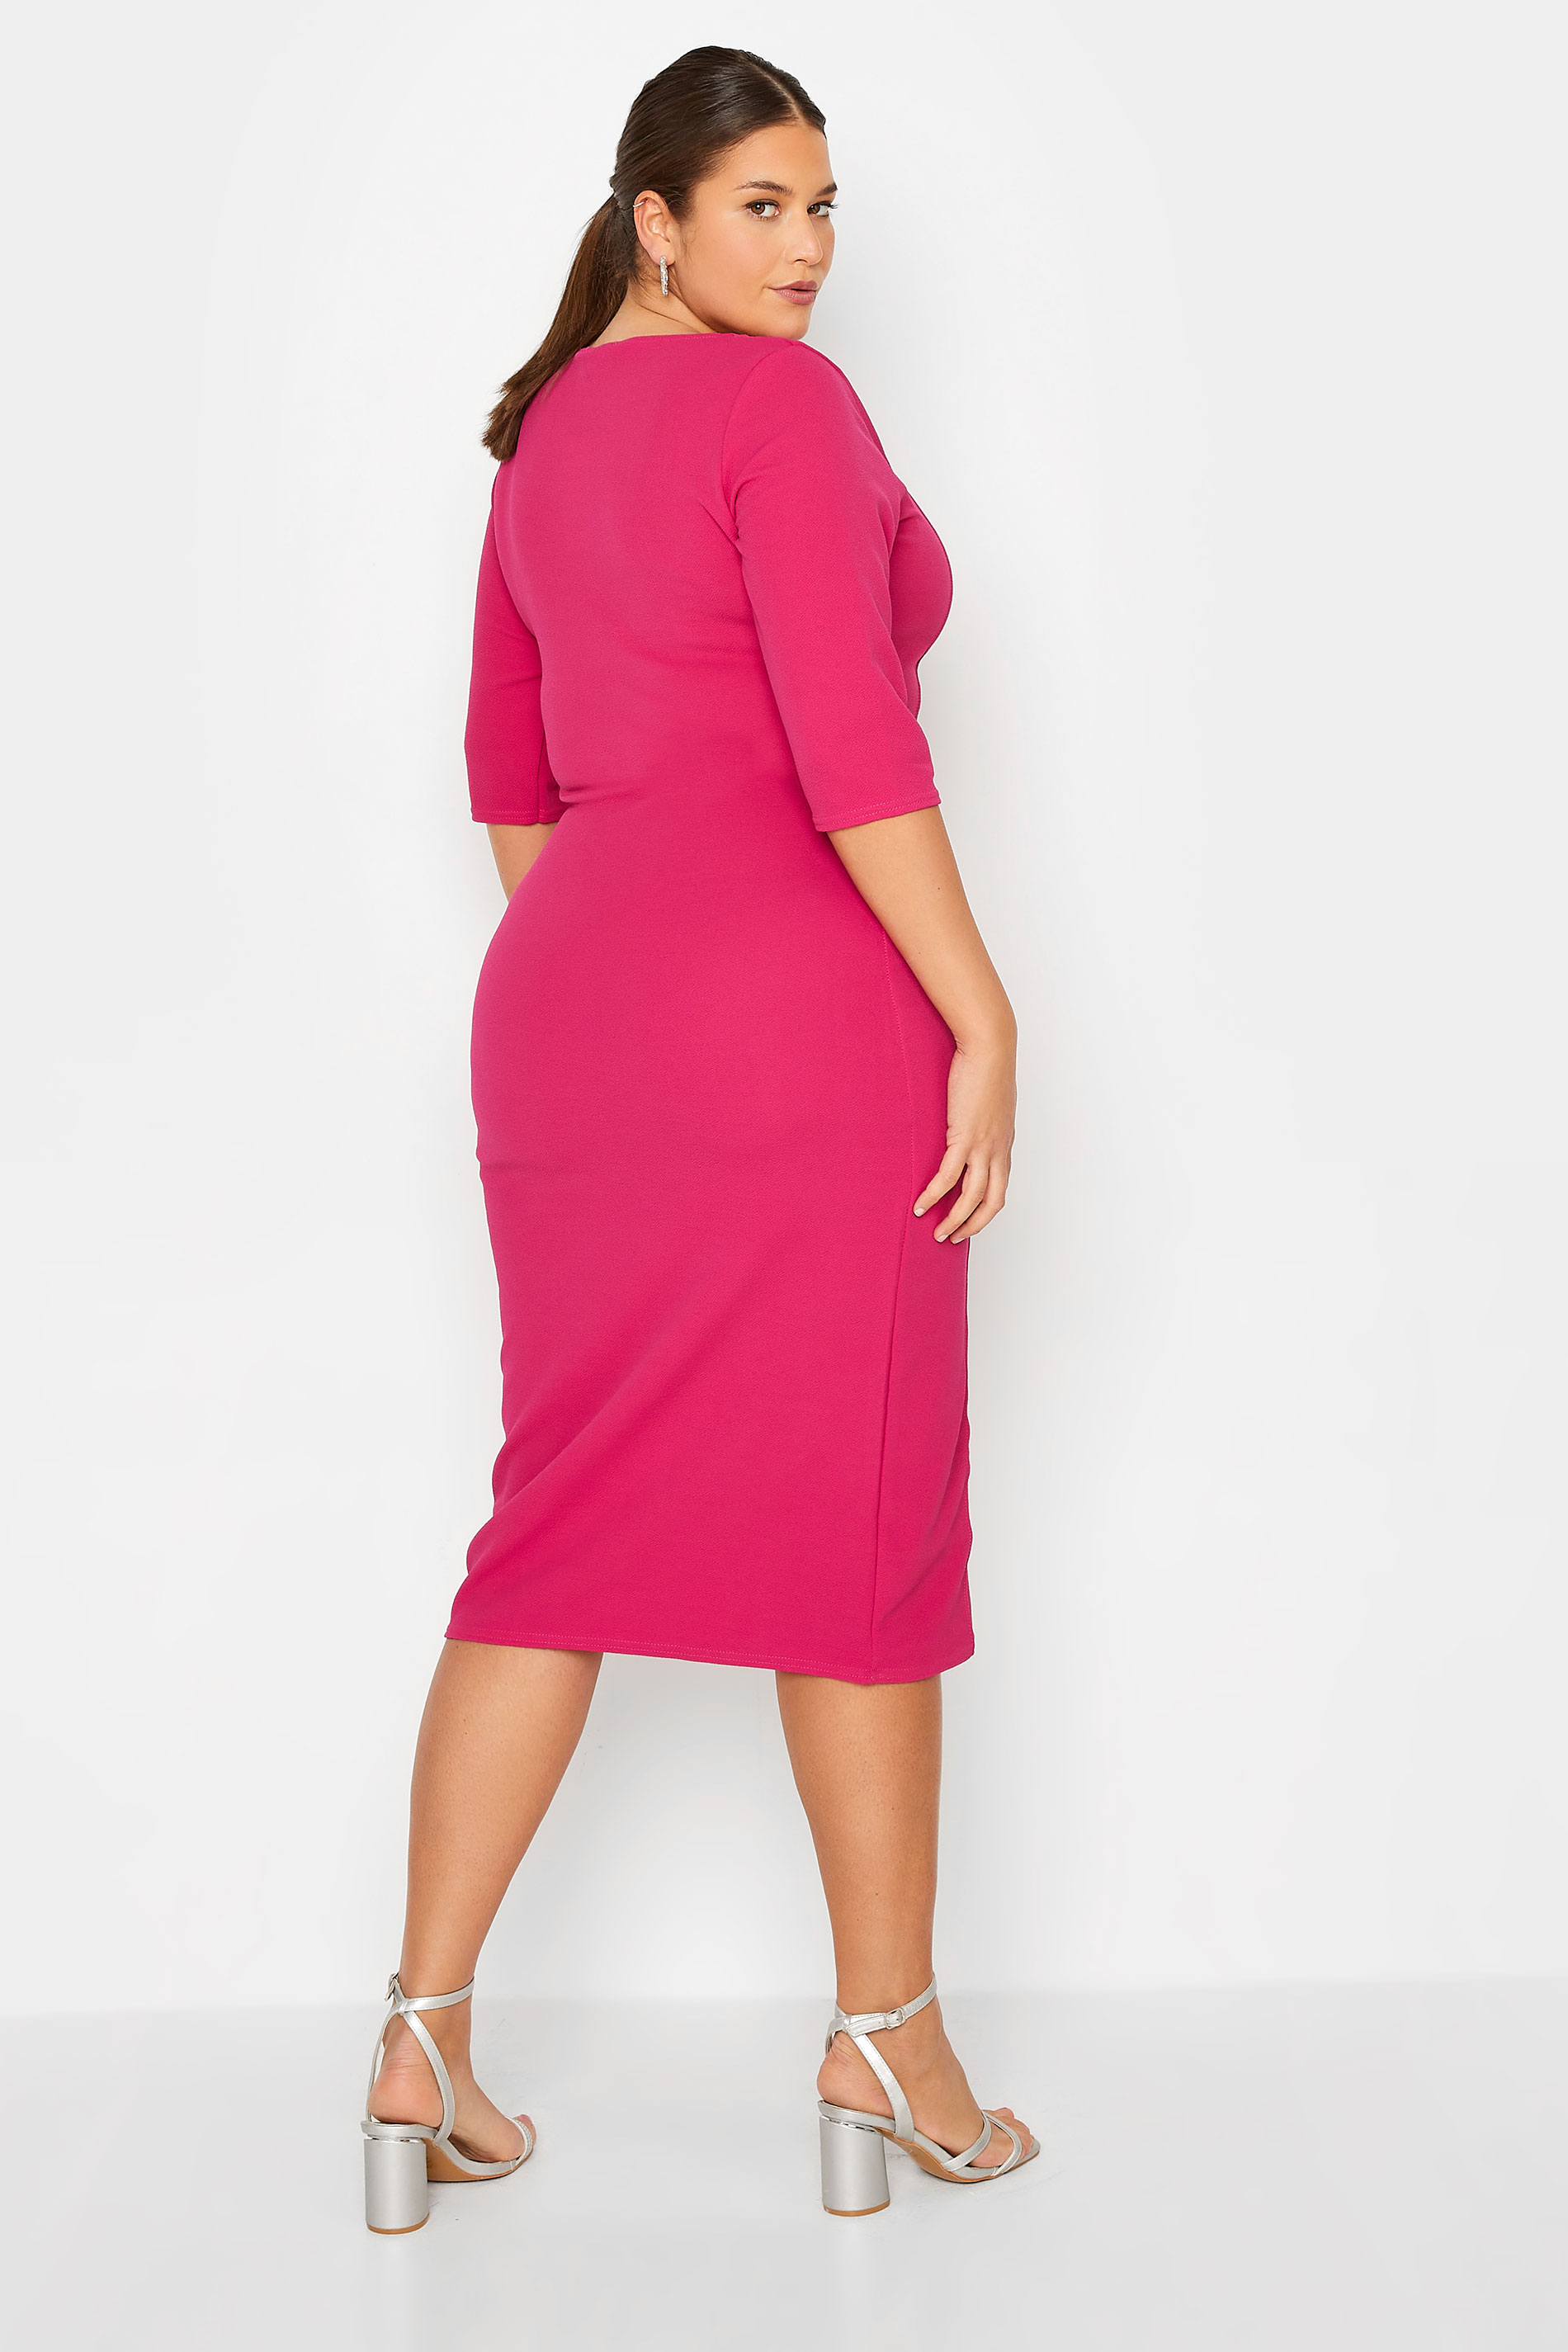 Tall Women's LTS Bright Pink Notch Neck Midi Dress | Long Tall Sally 3